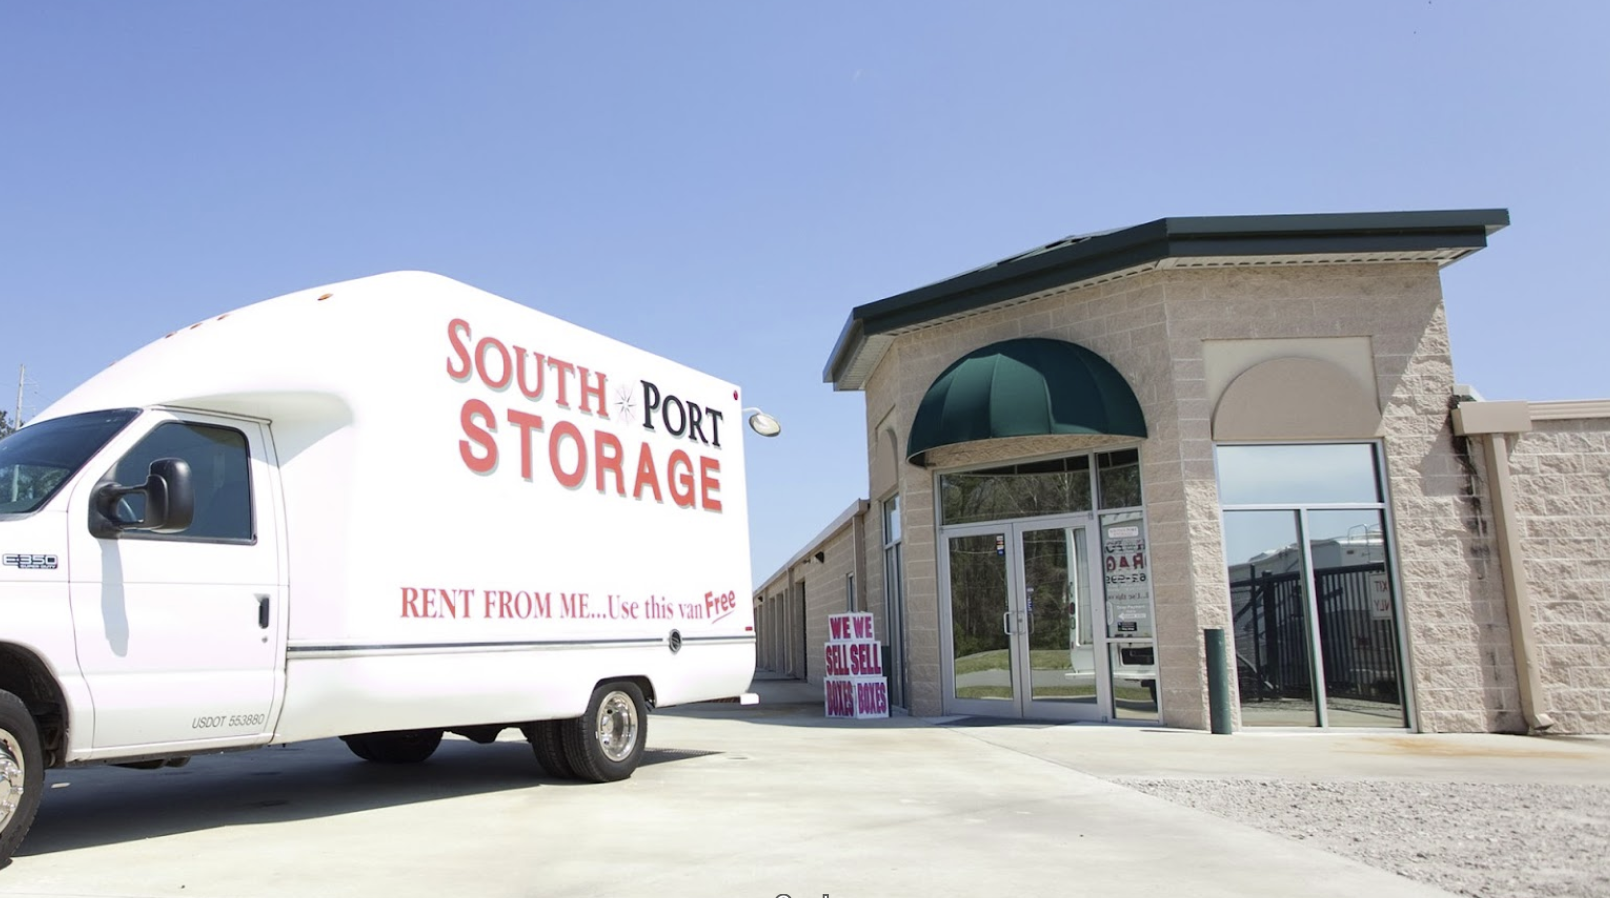 South Port Storage